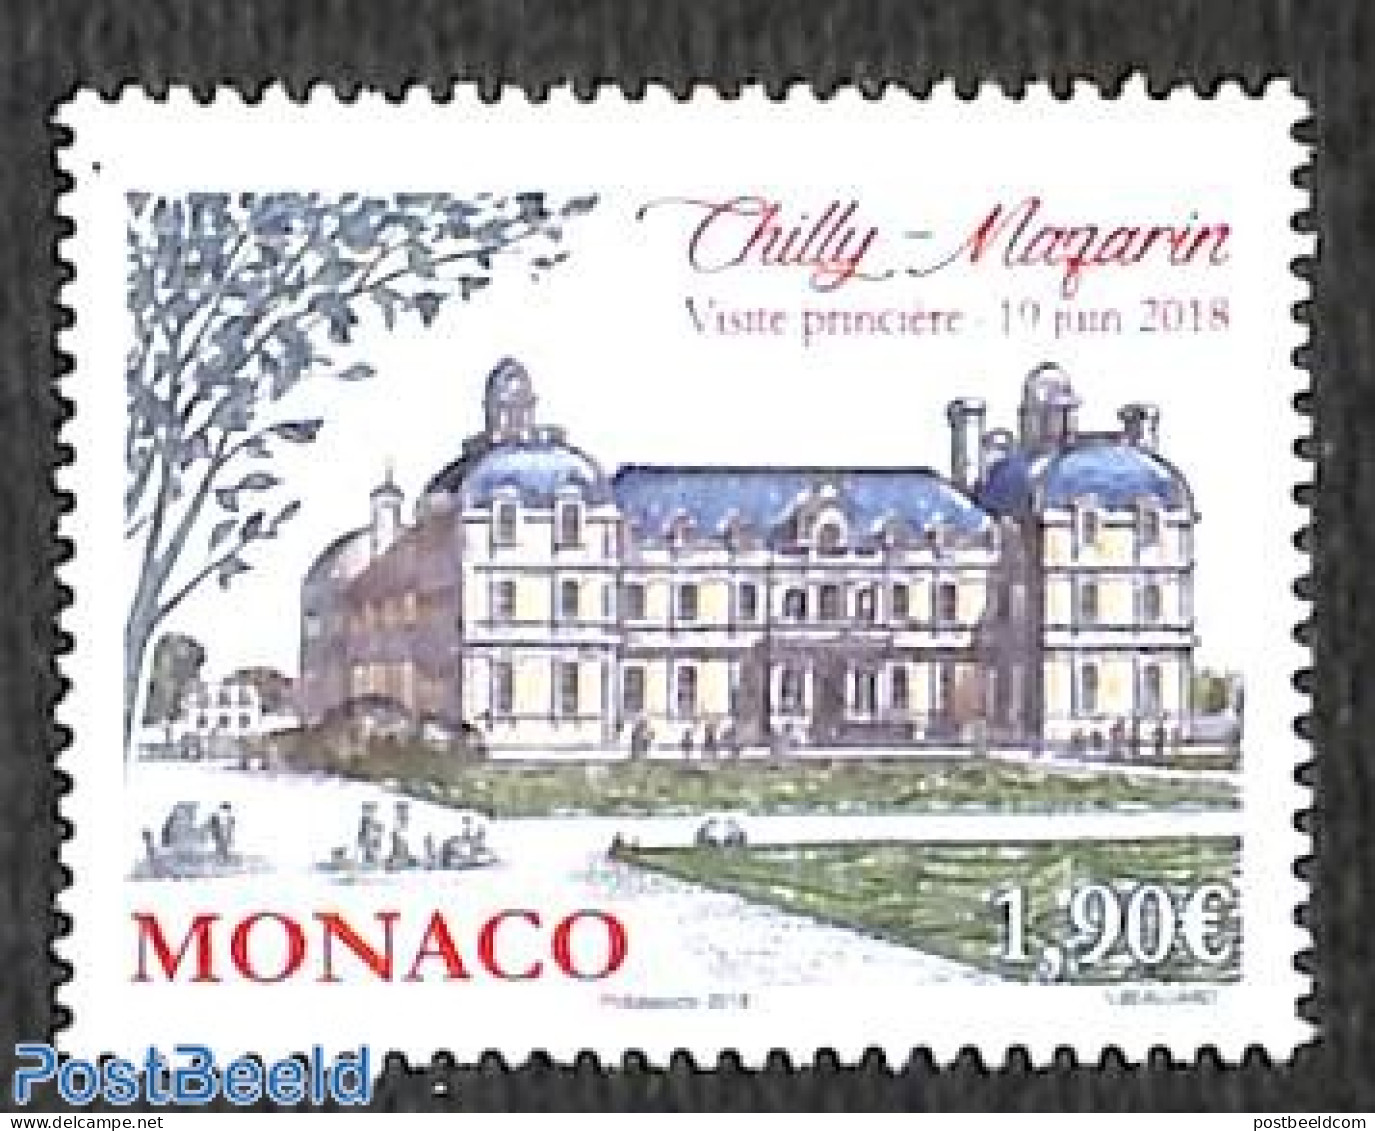 Monaco 2018 Chilly Mazarin 1v, Mint NH, Art - Castles & Fortifications - Ungebraucht